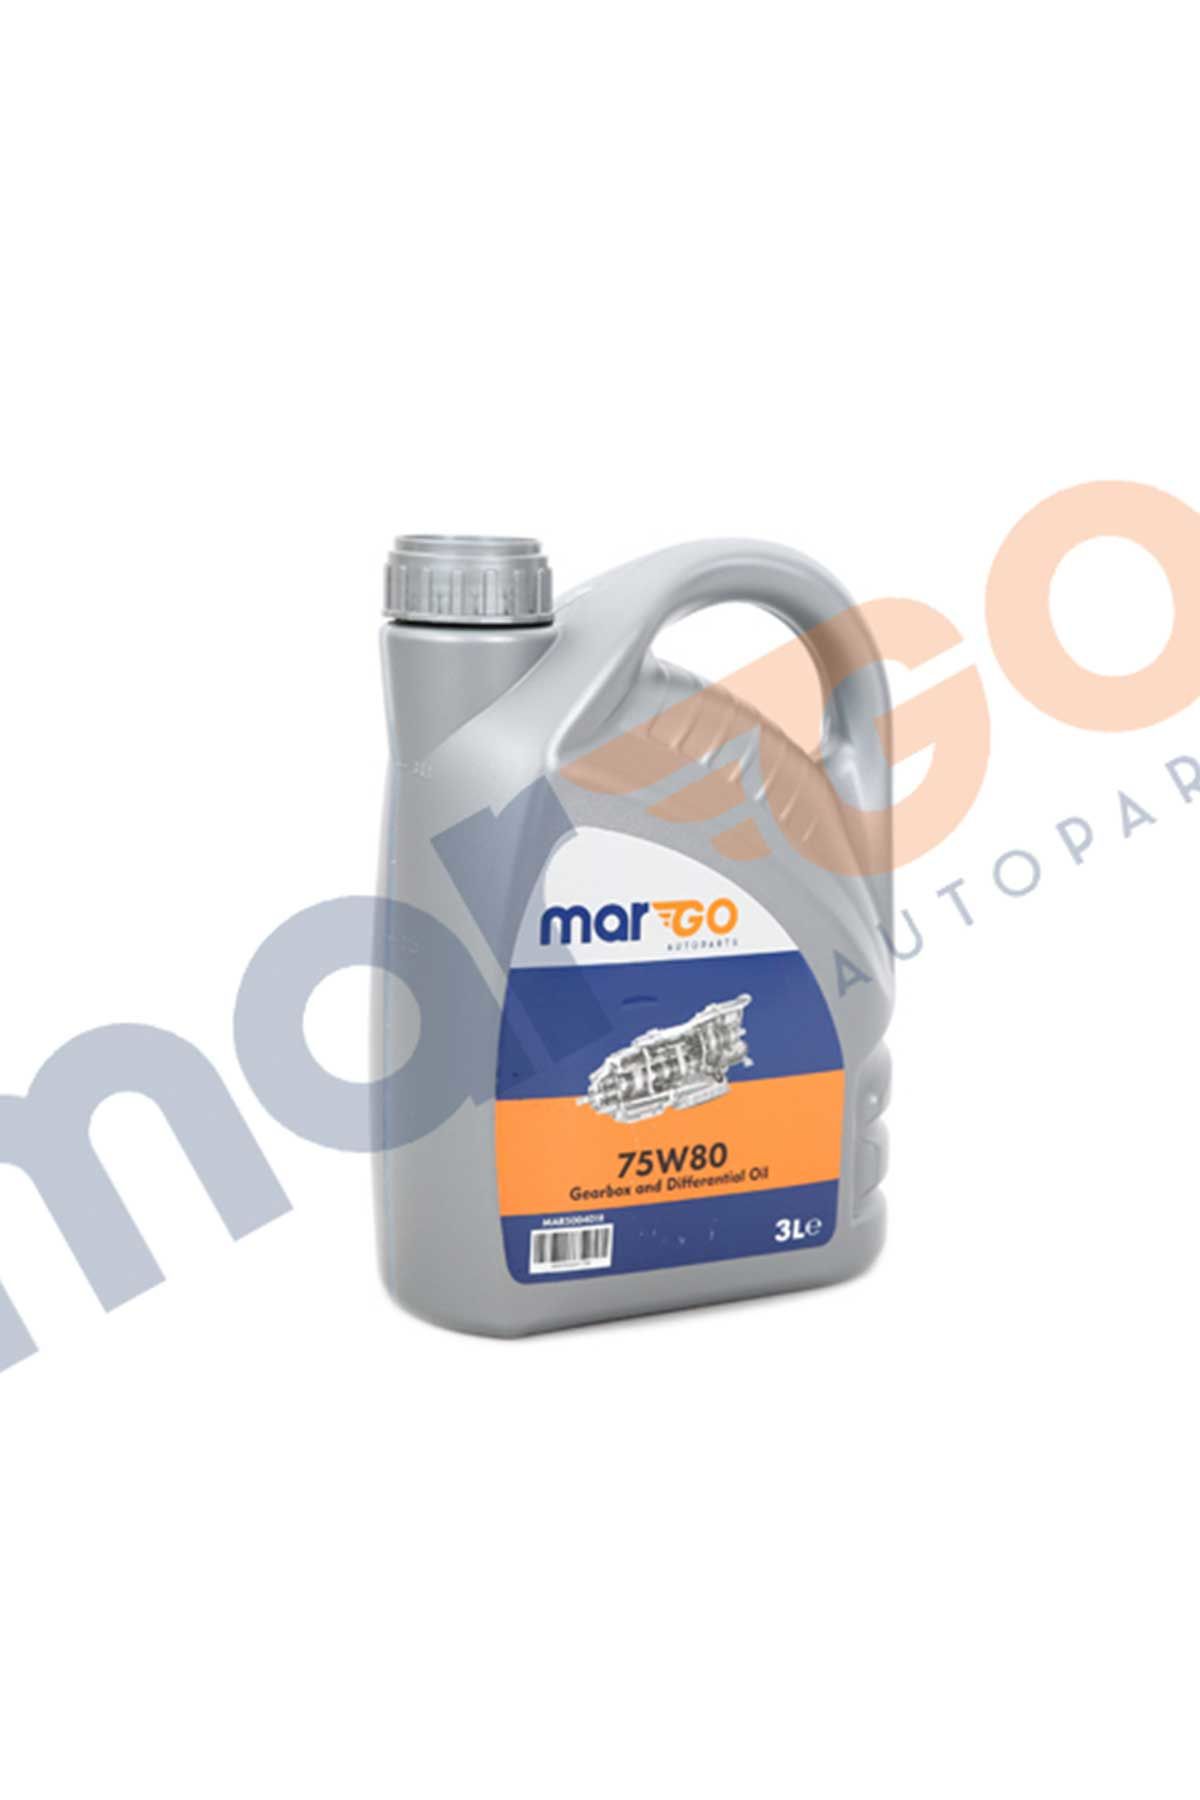 Margo 75W80 Manuel OE Şanzıman Yağı 3 Litre